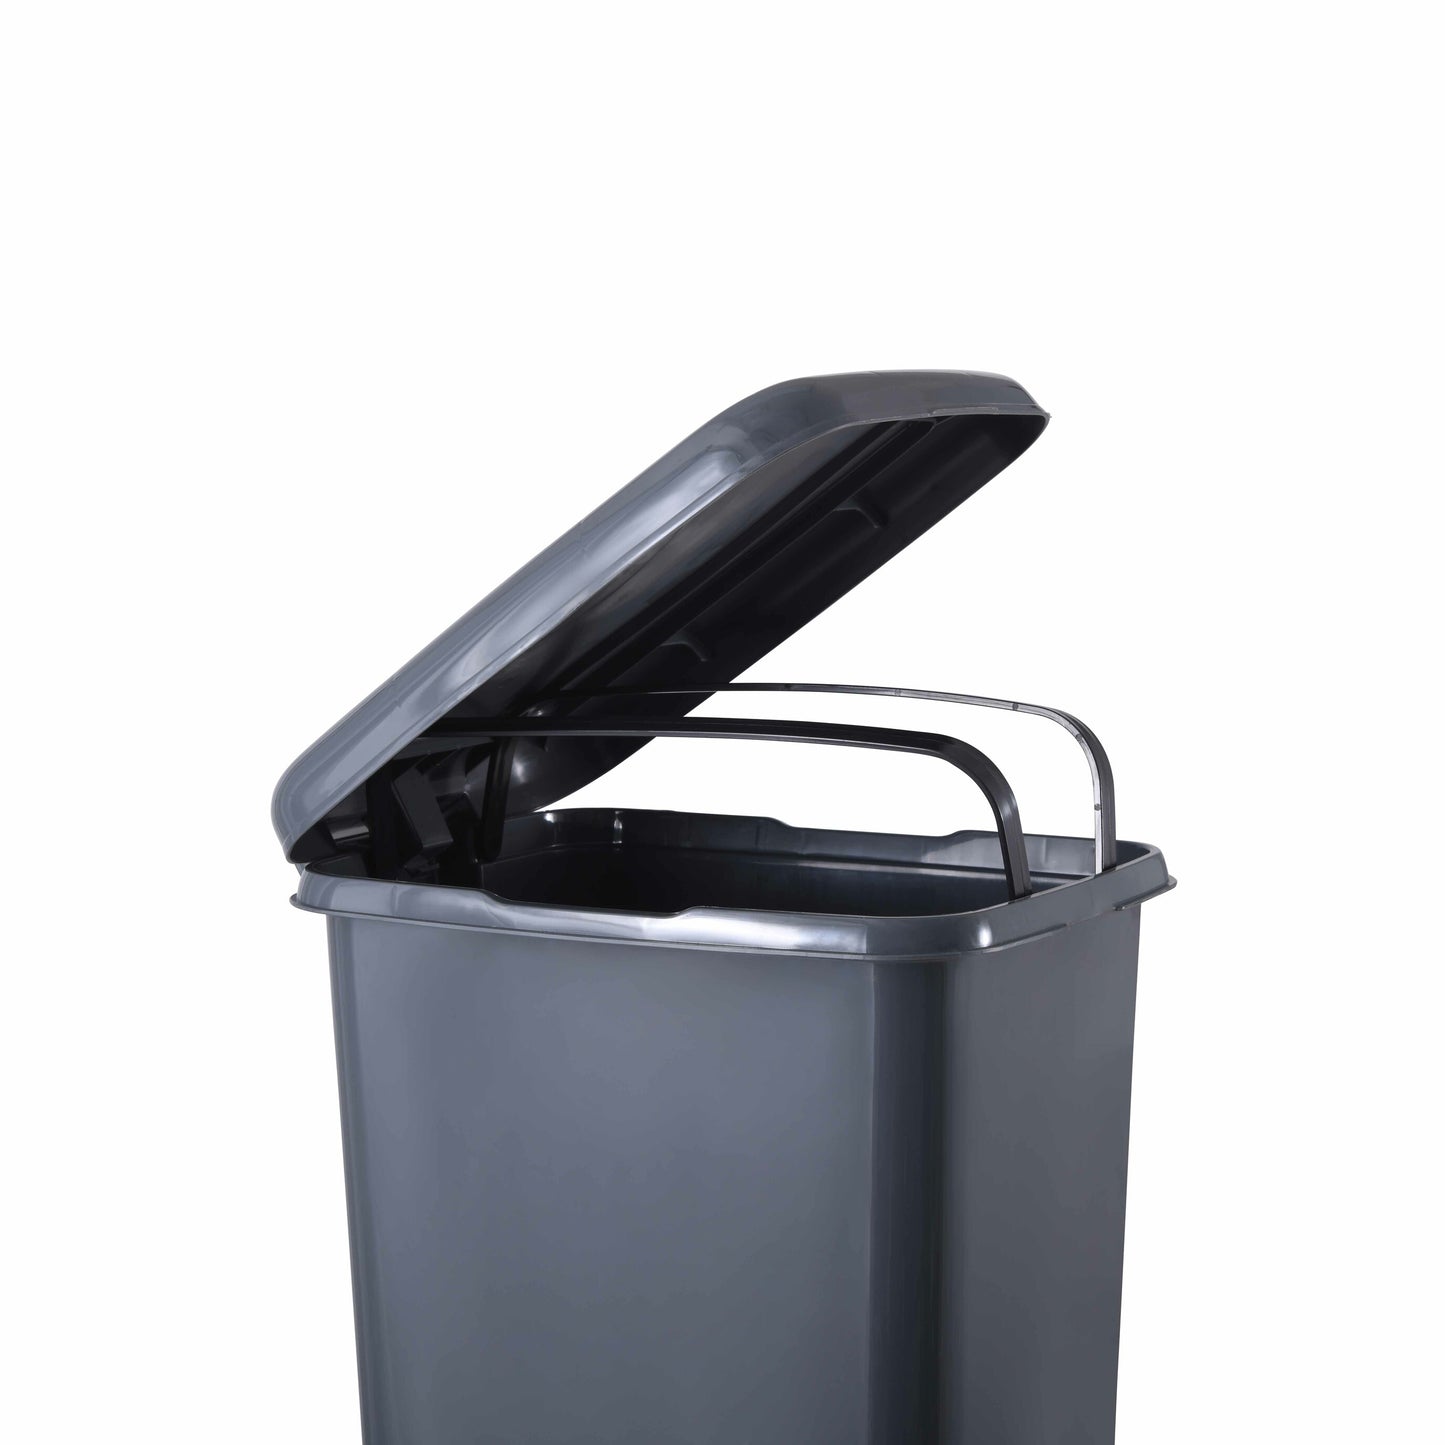 Slim Pedal Trash Can, 10 Qt - Onyx Grey